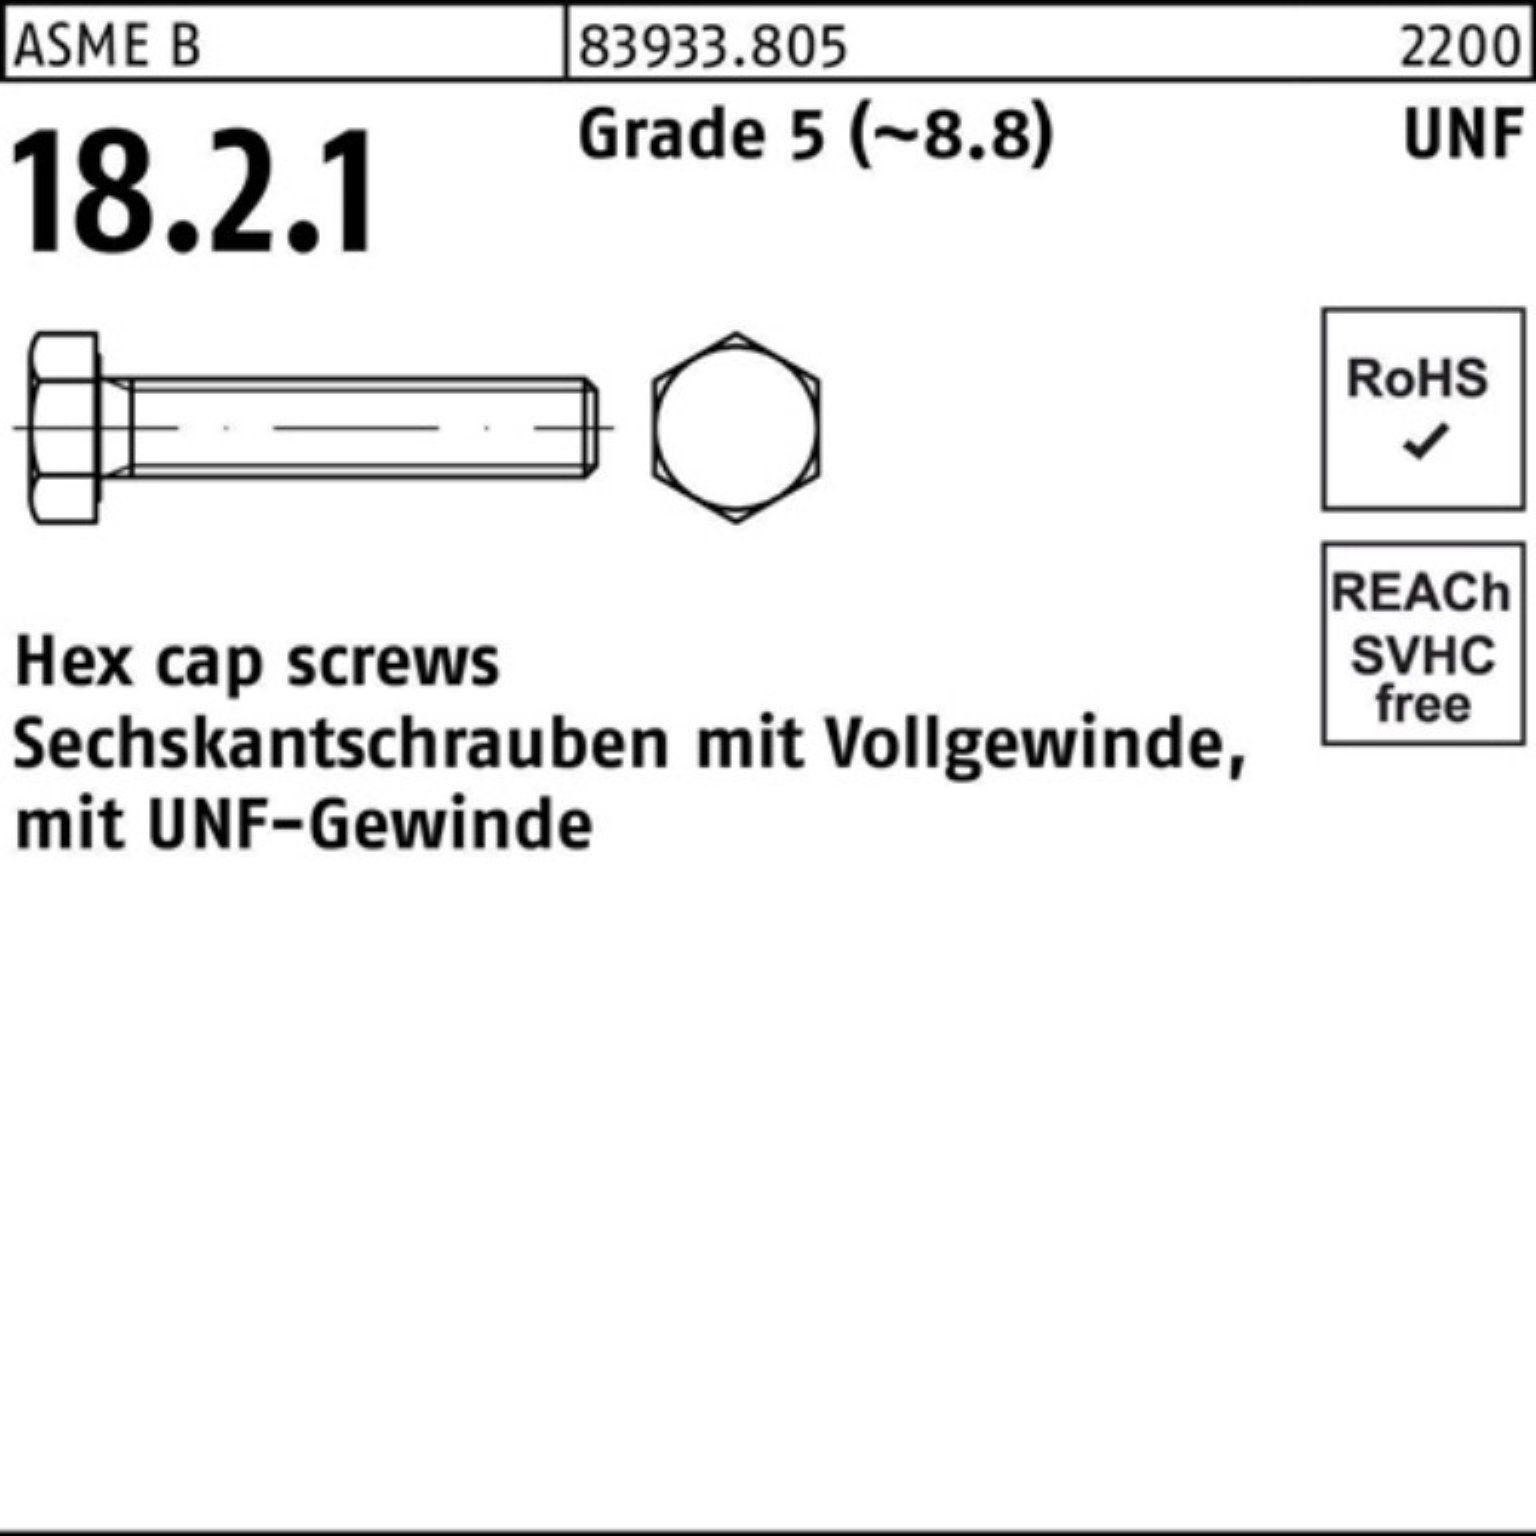 Reyher Sechskantschraube 100er Pack Sechskantschraube R 83933 UNF-Gewinde VG 3/8x 1/2 Grade 5